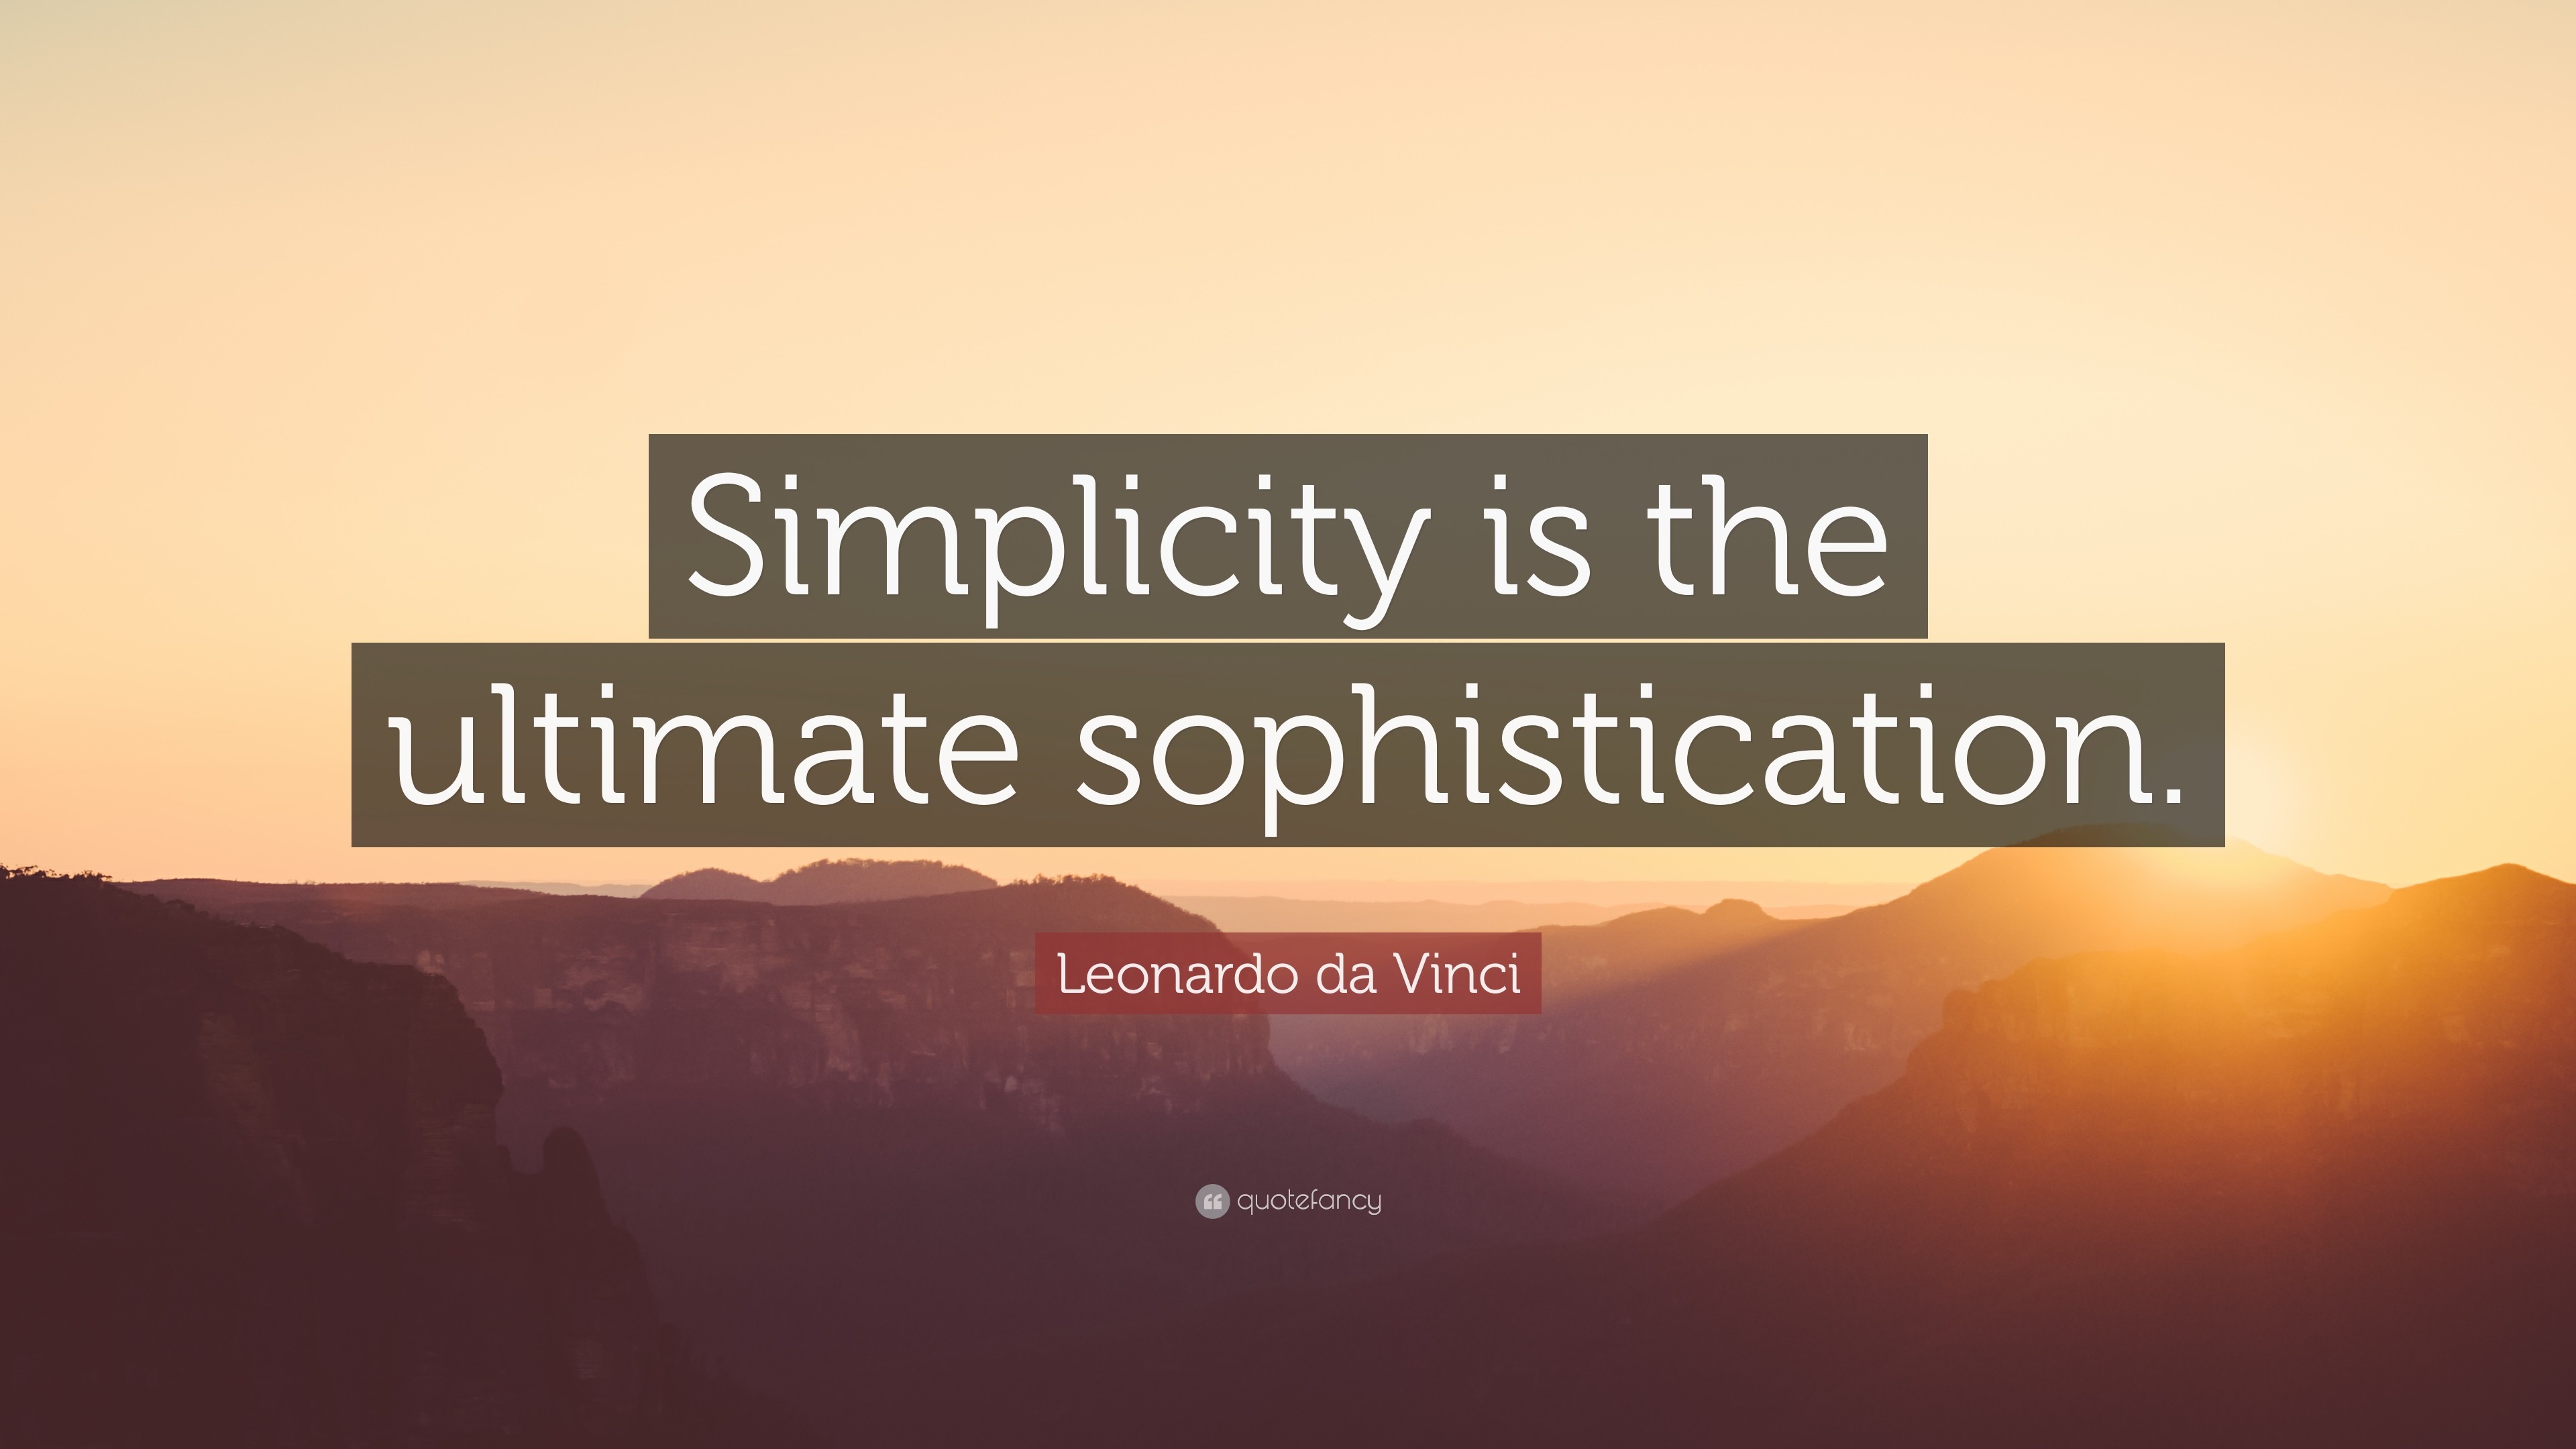 3840x2160 Leonardo da Vinci Quote: “Simplicity is the ultimate sophistication.”